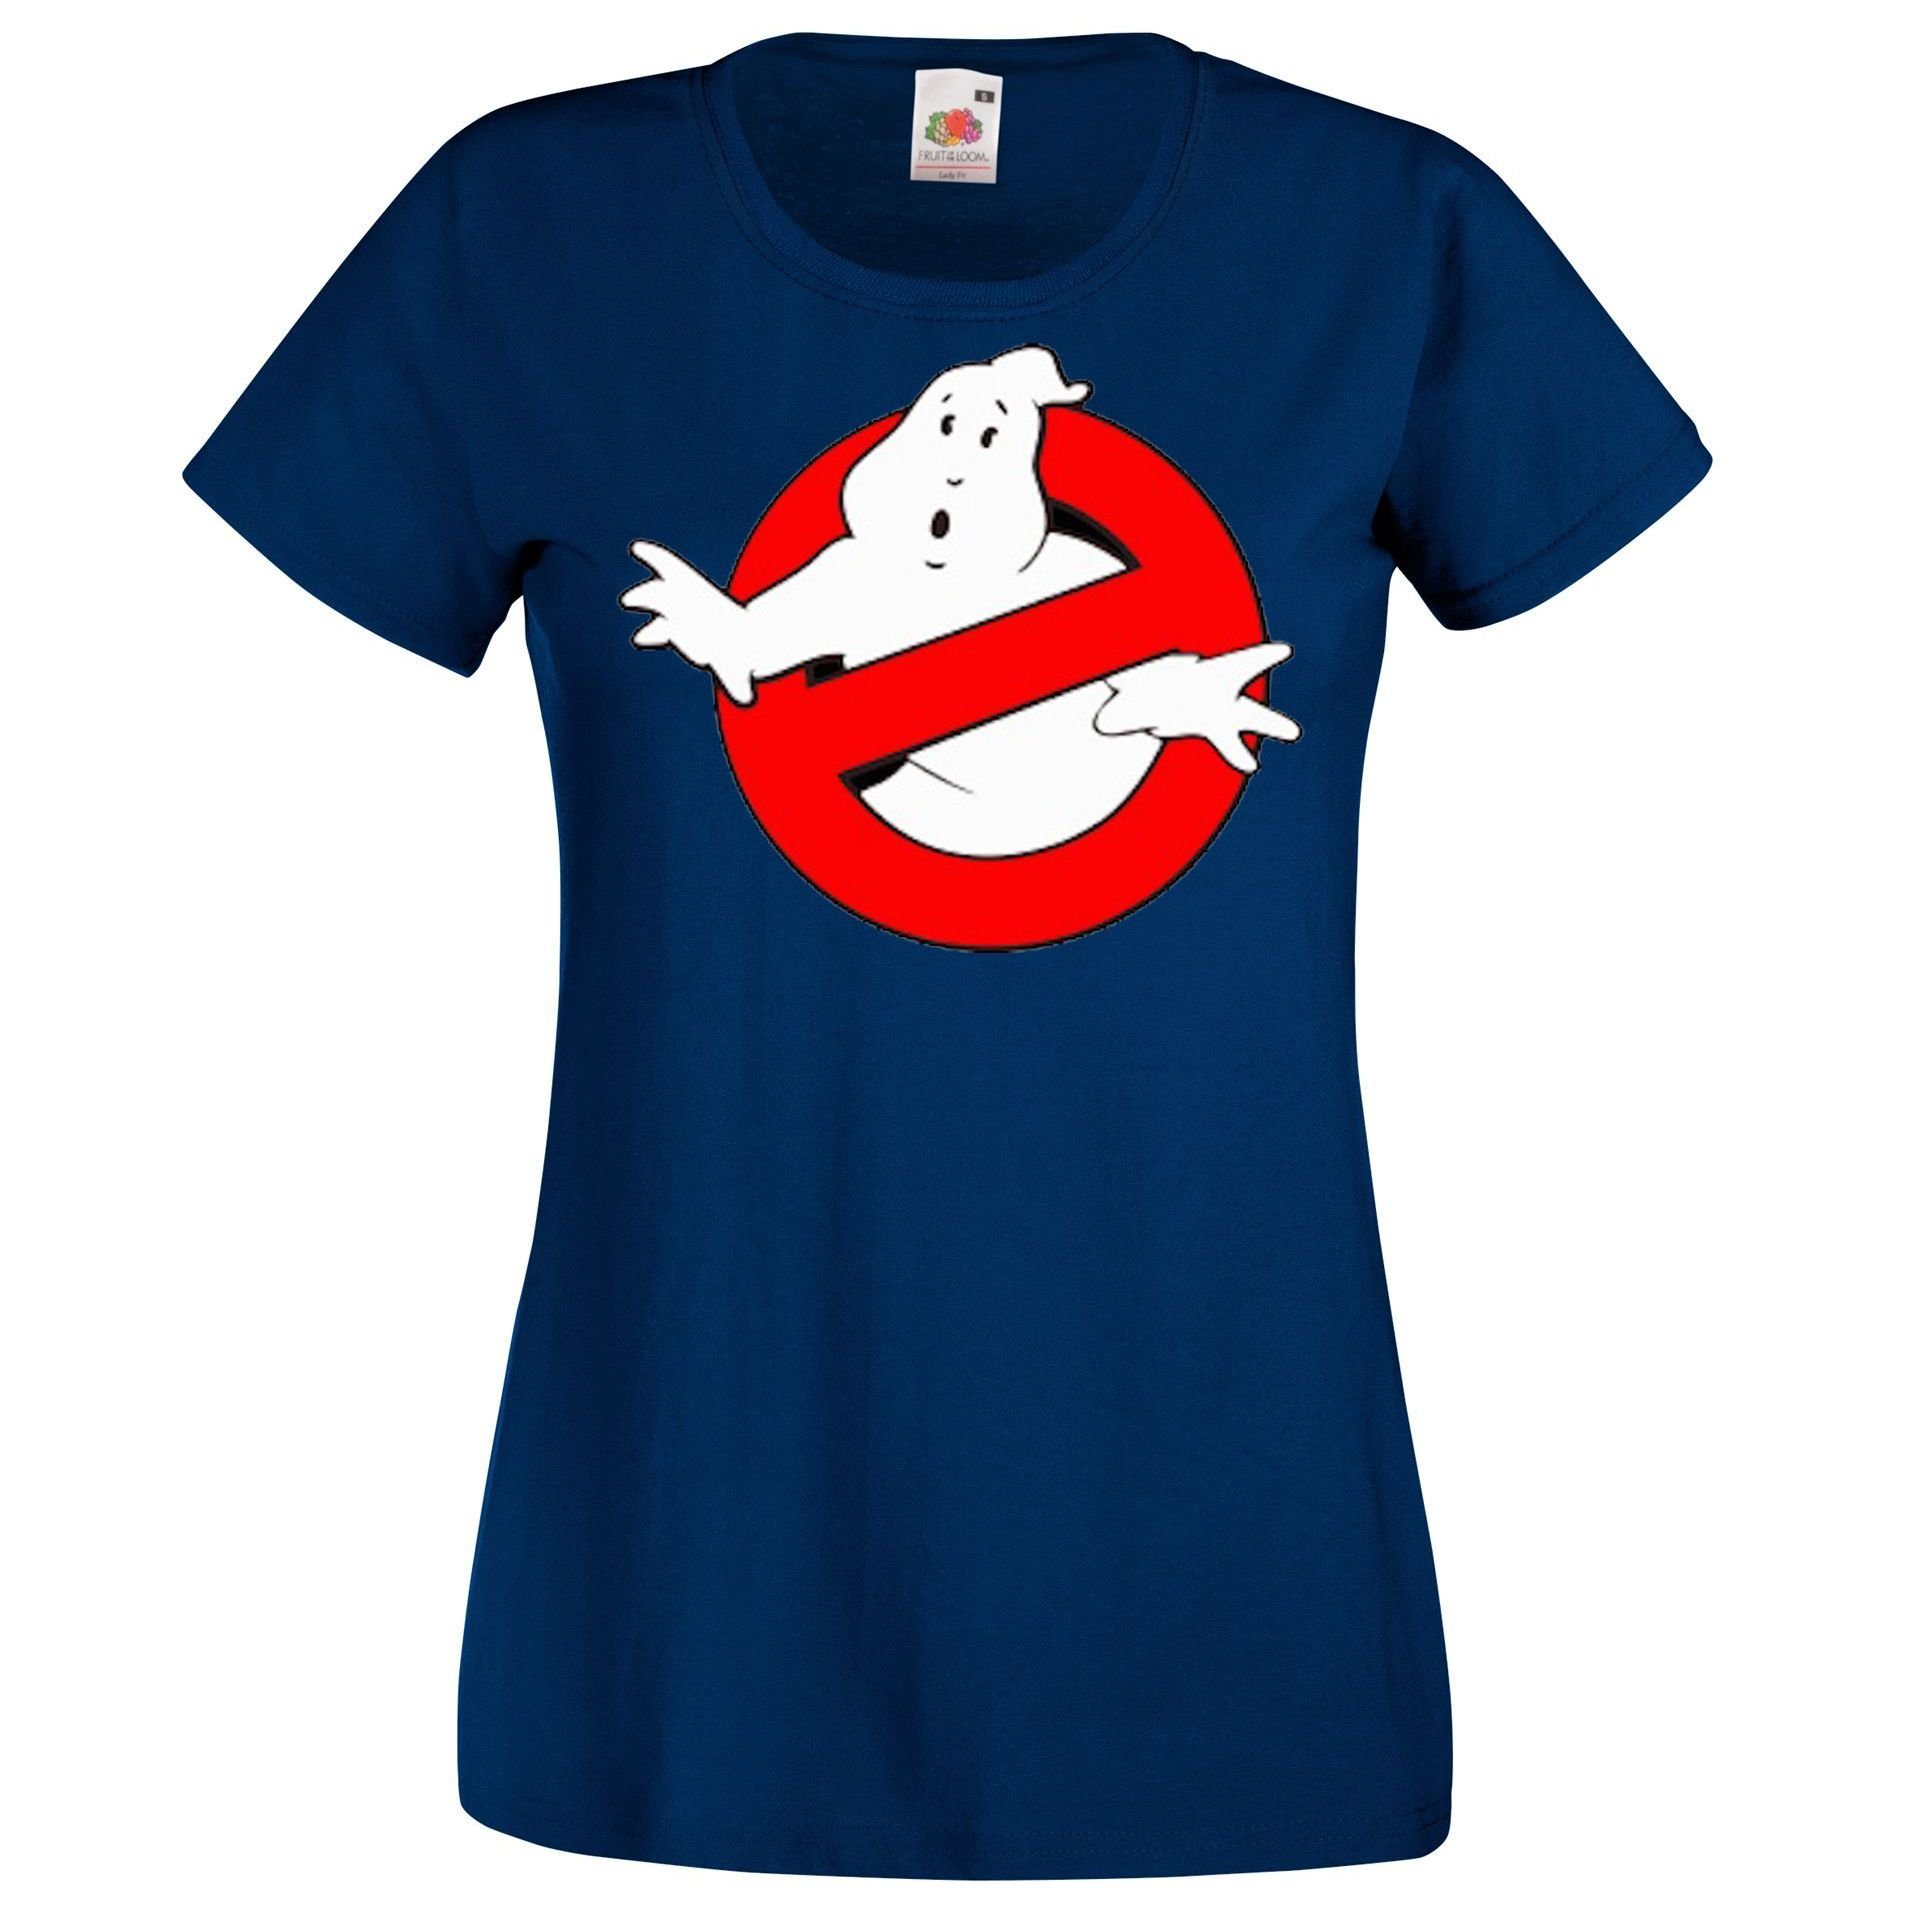 Ghostbusters Navyblau T-Shirt Youth trendigen Frontprint Designz mit T-Shirt Damen